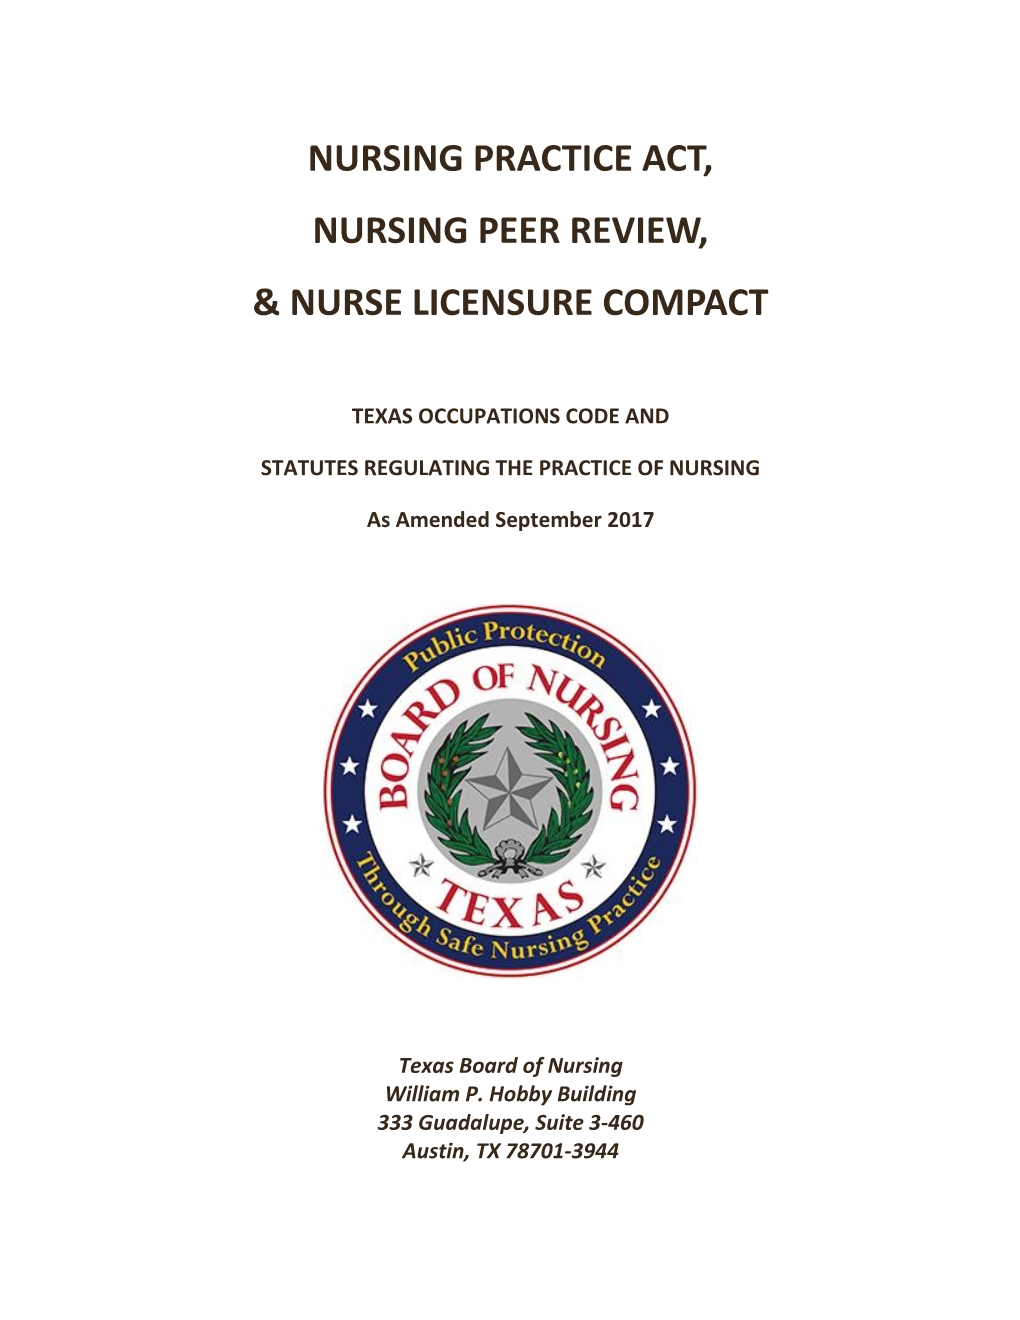 Nursing Practice Act, Nursing Peer Review, & Nurse Licensure Compact